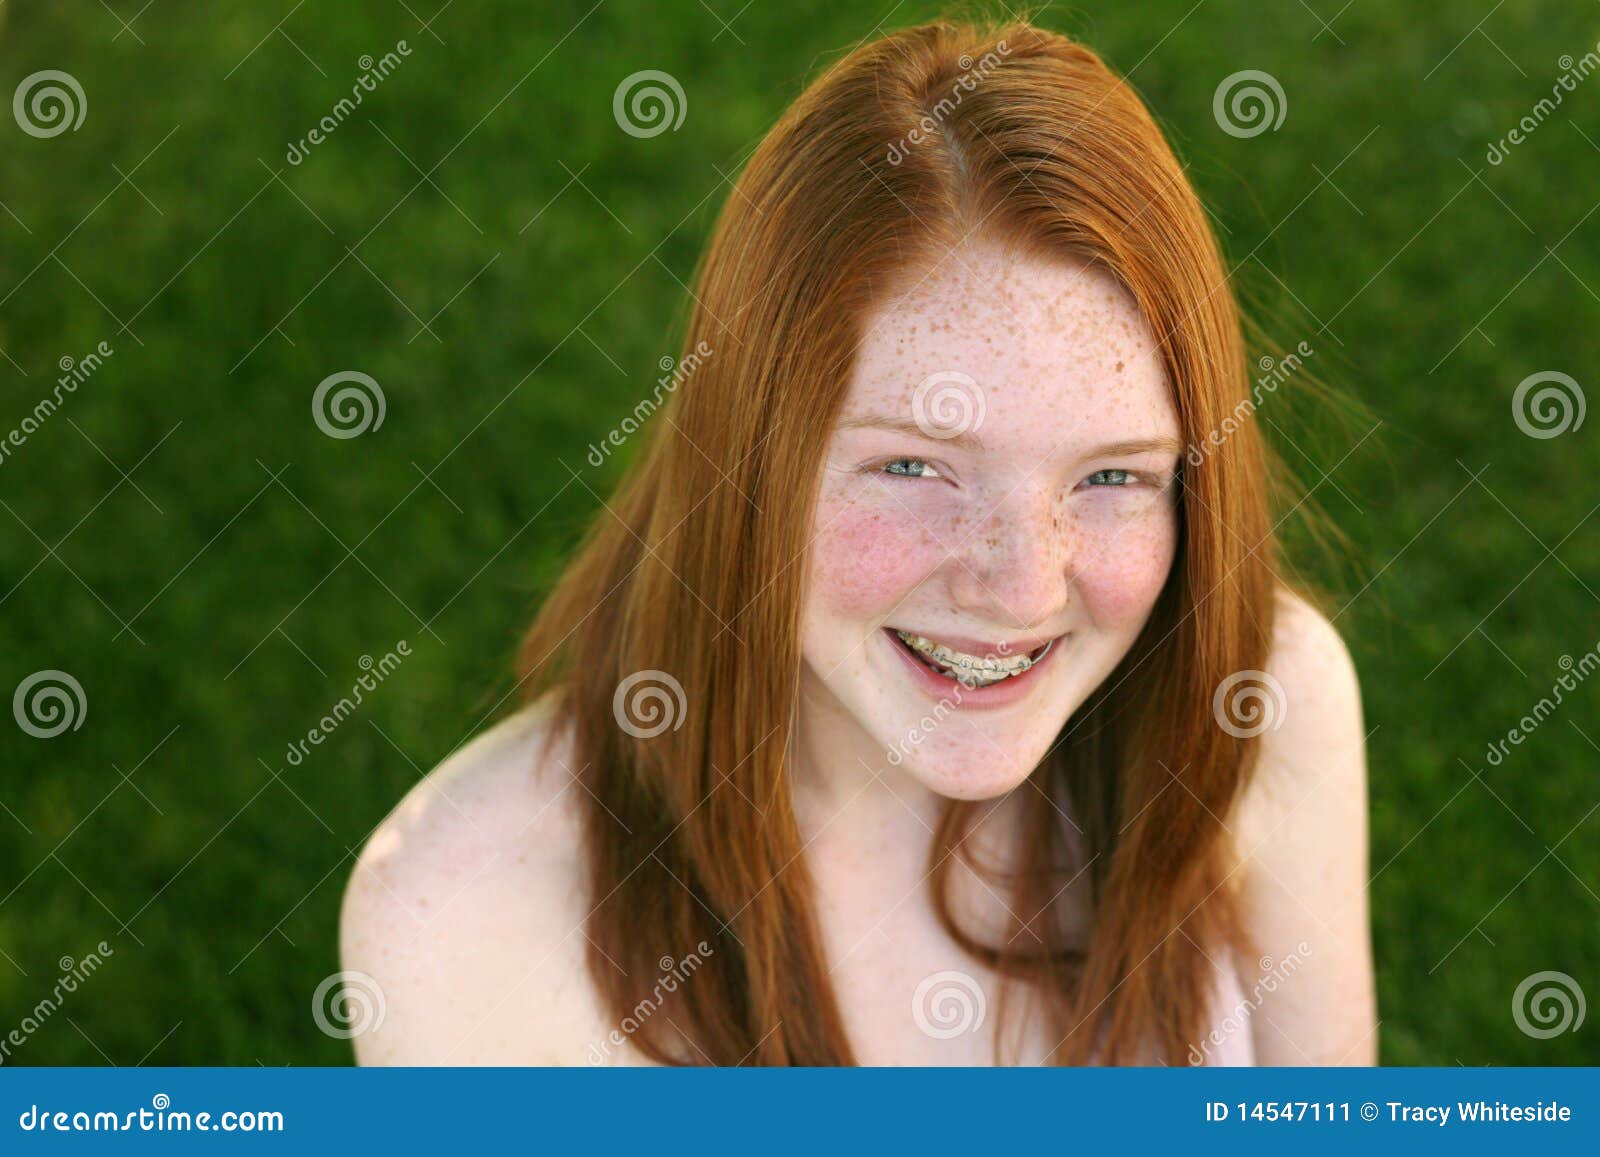 redhead girls with braces sex pics